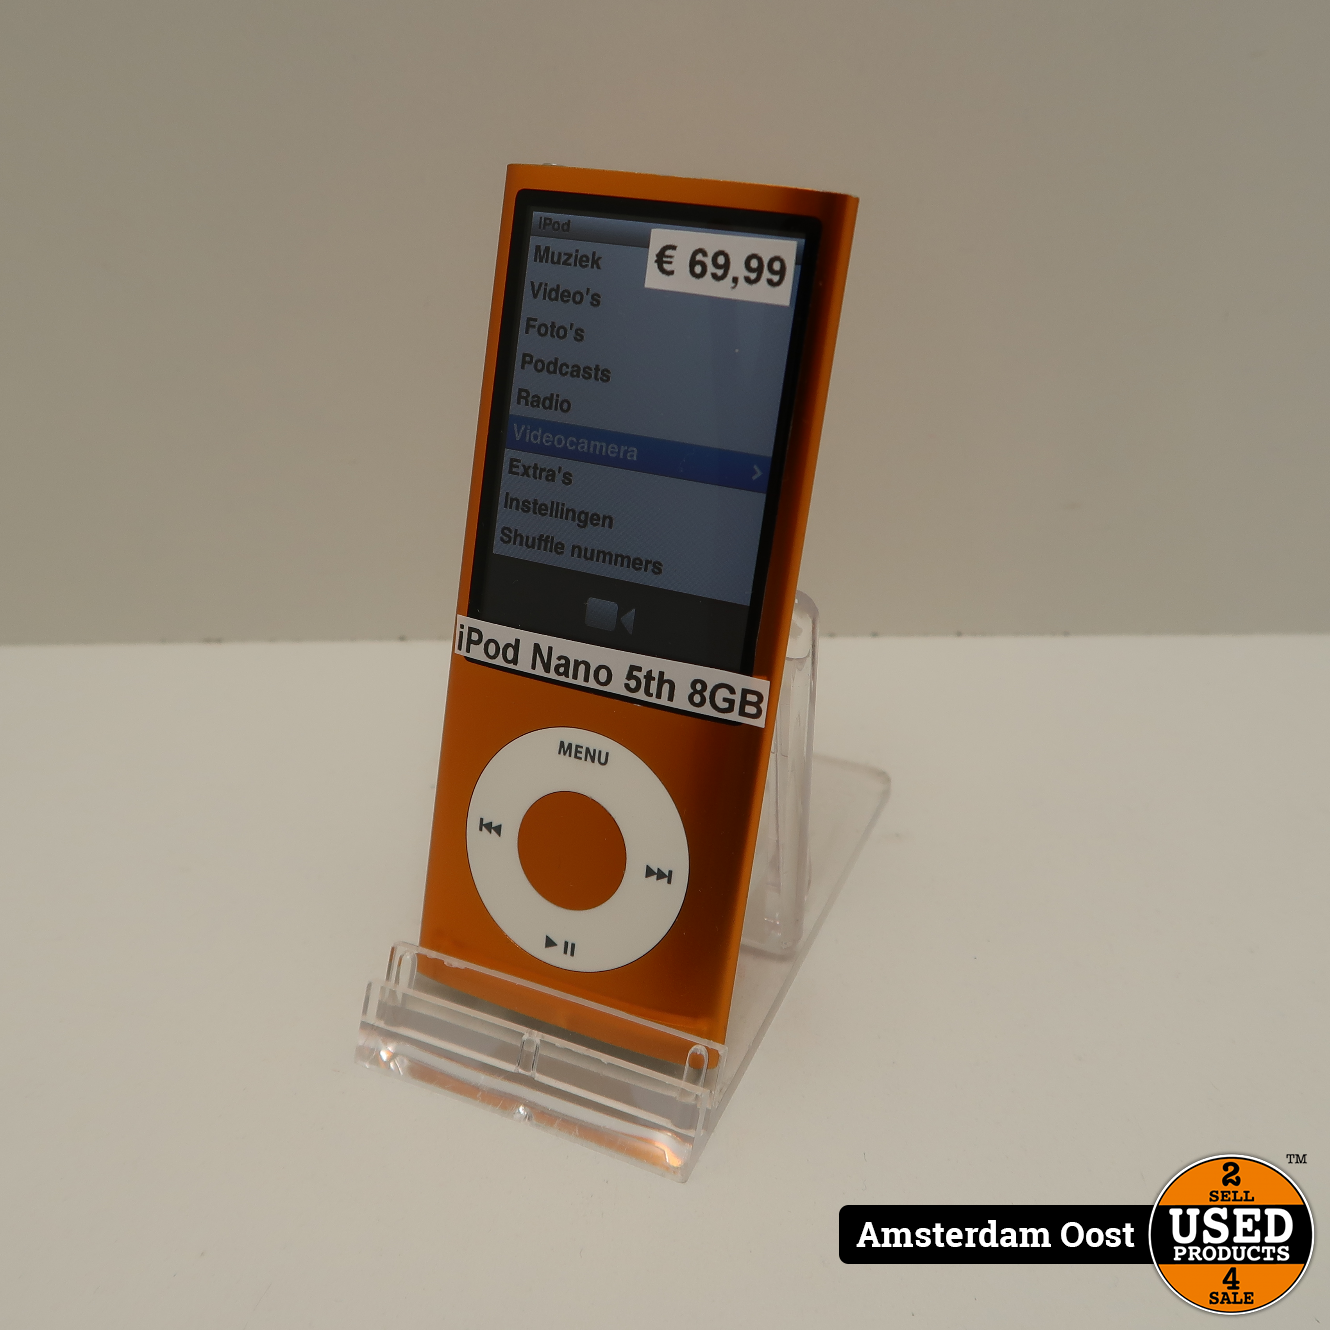 Getand Daarom veel plezier iPod Nano 5th Gen 8GB Orange | in Goede Staat - Used Products Amsterdam Oost